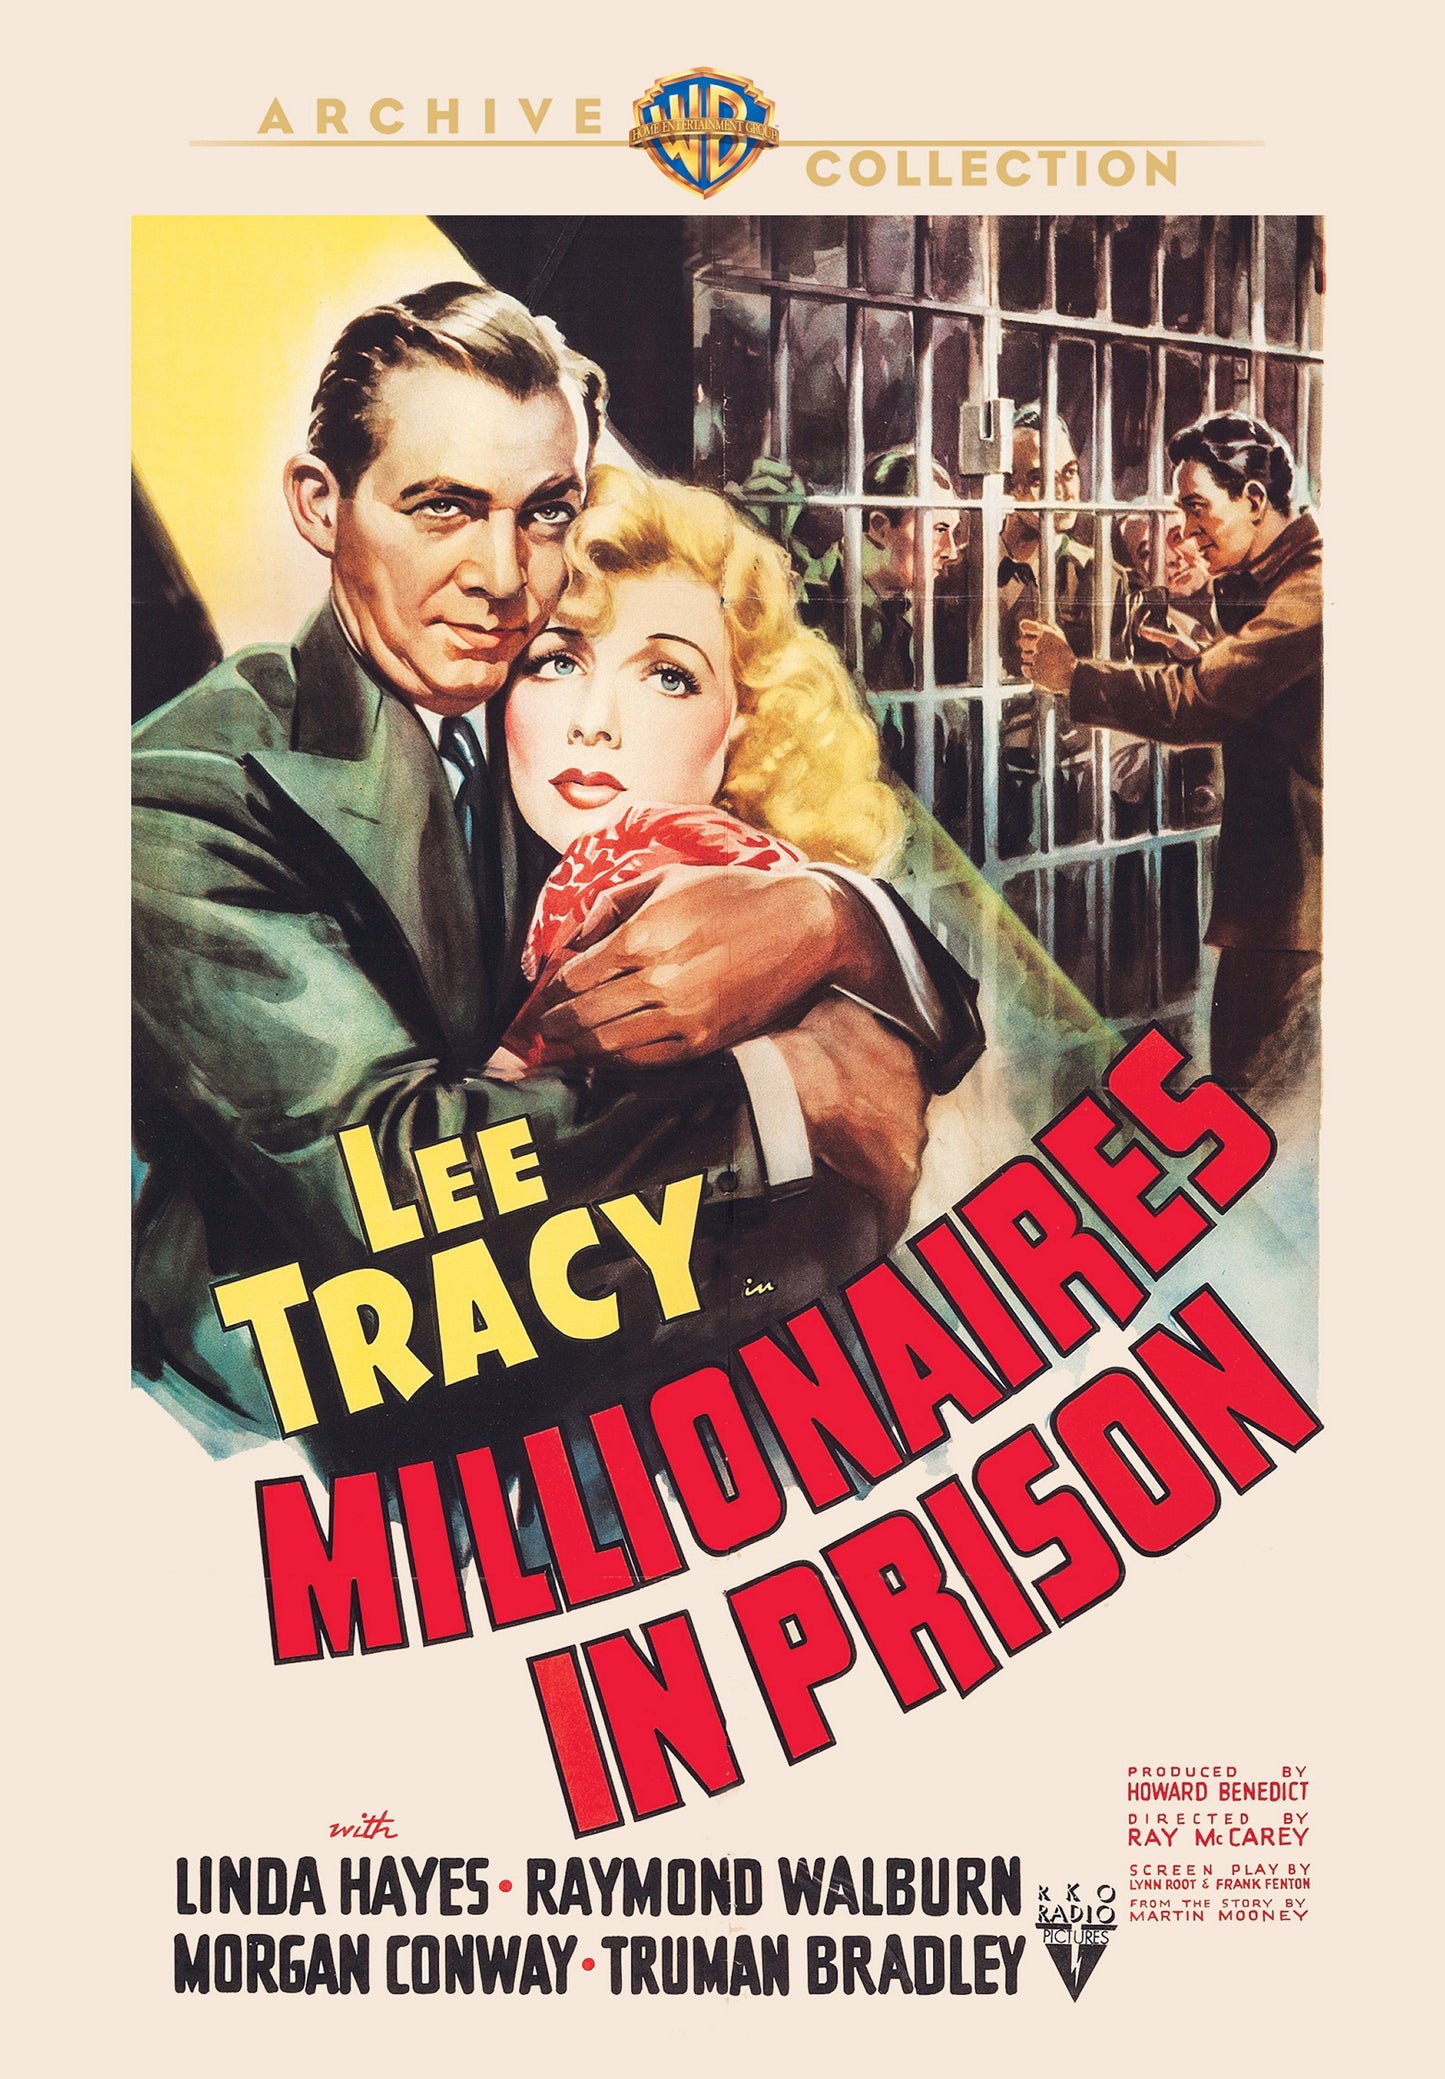 Millionaires in Prison cover art